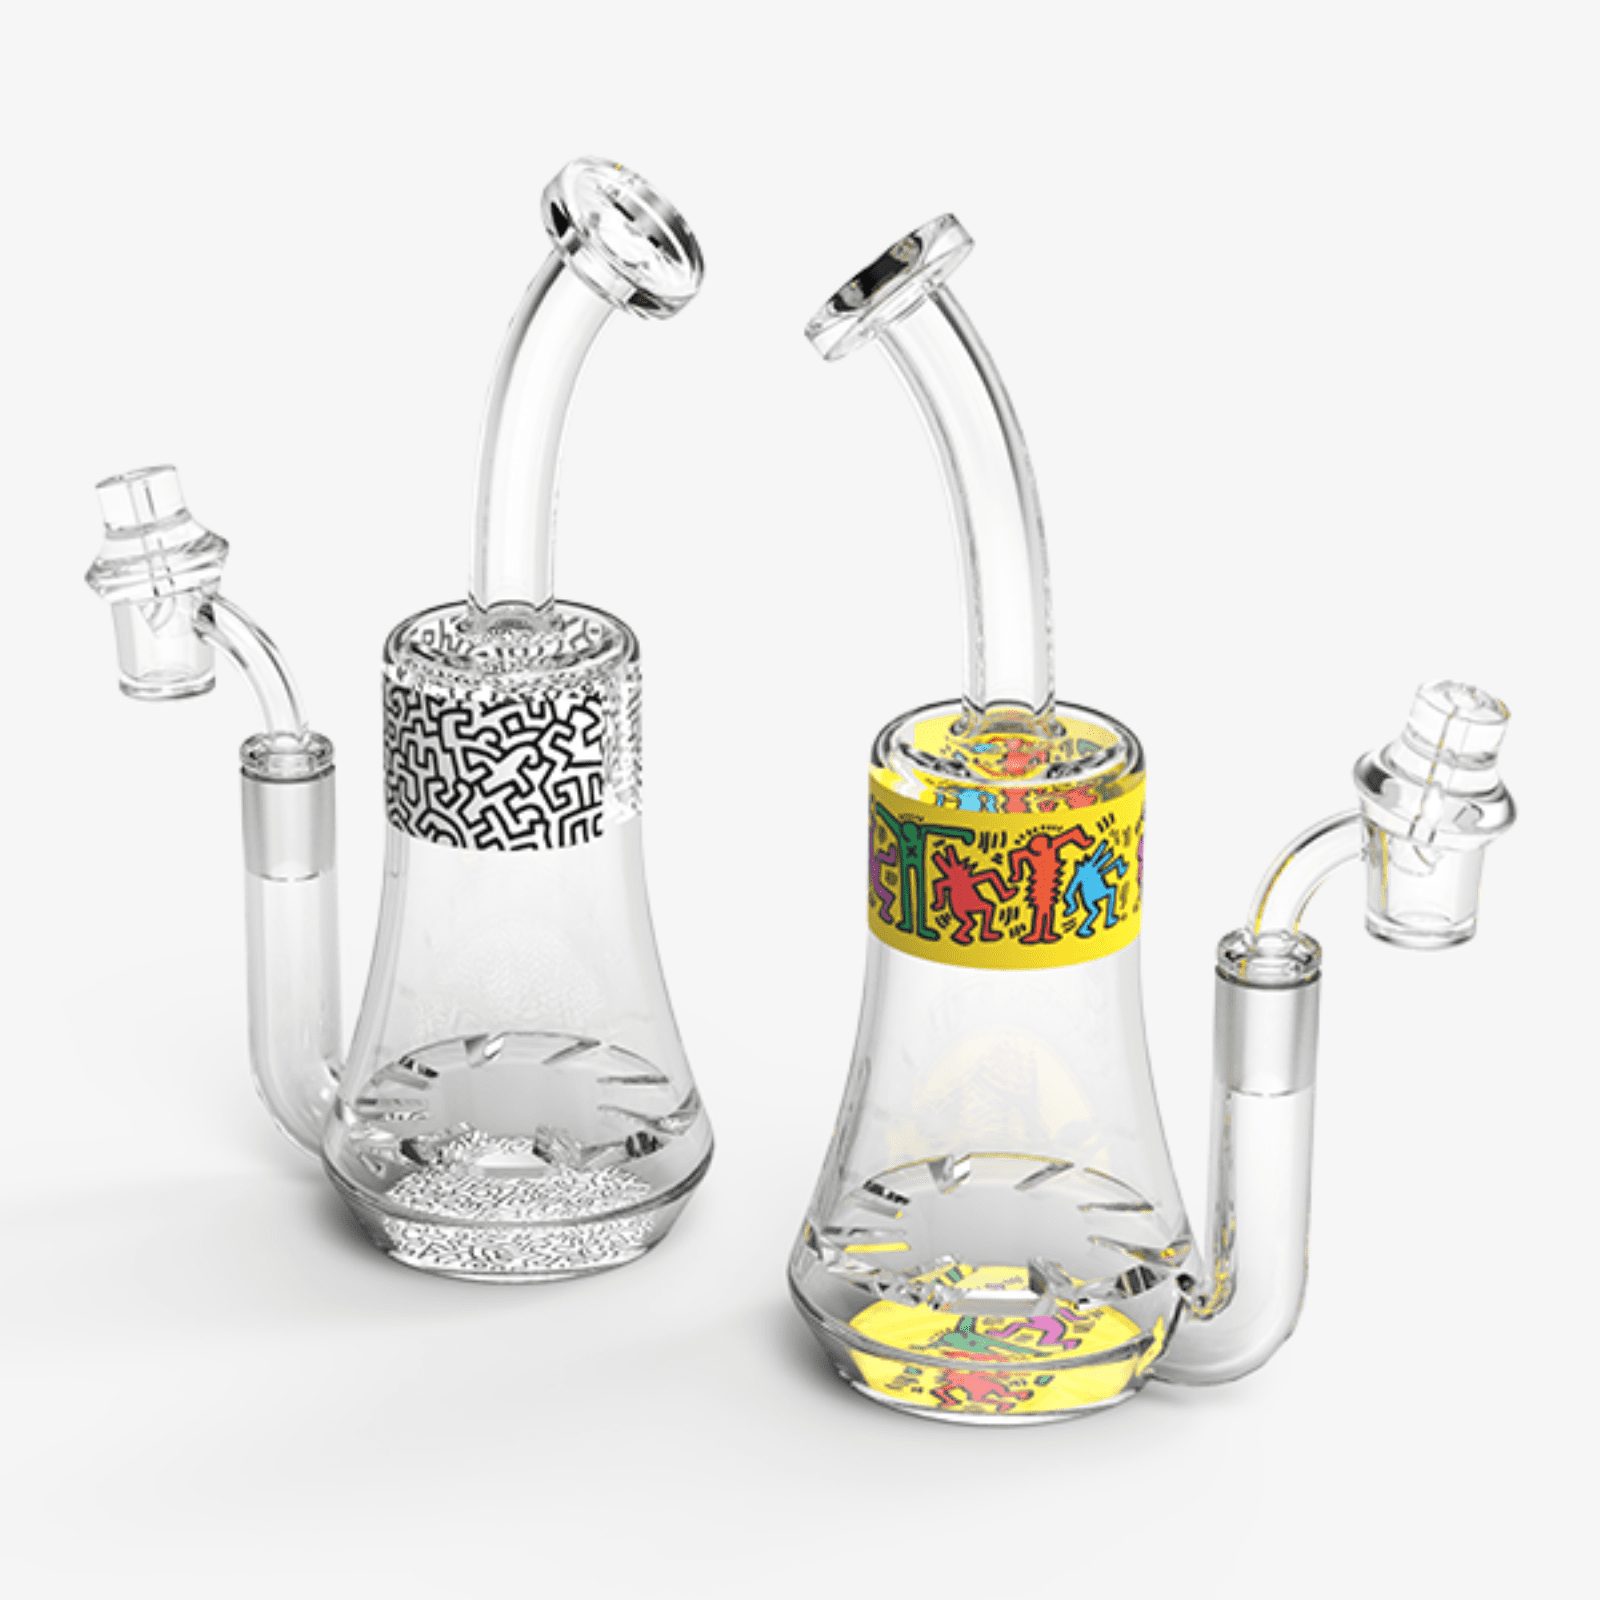 K. Haring Glass Designer Dab Rig Image K. Haring Brand Showcase